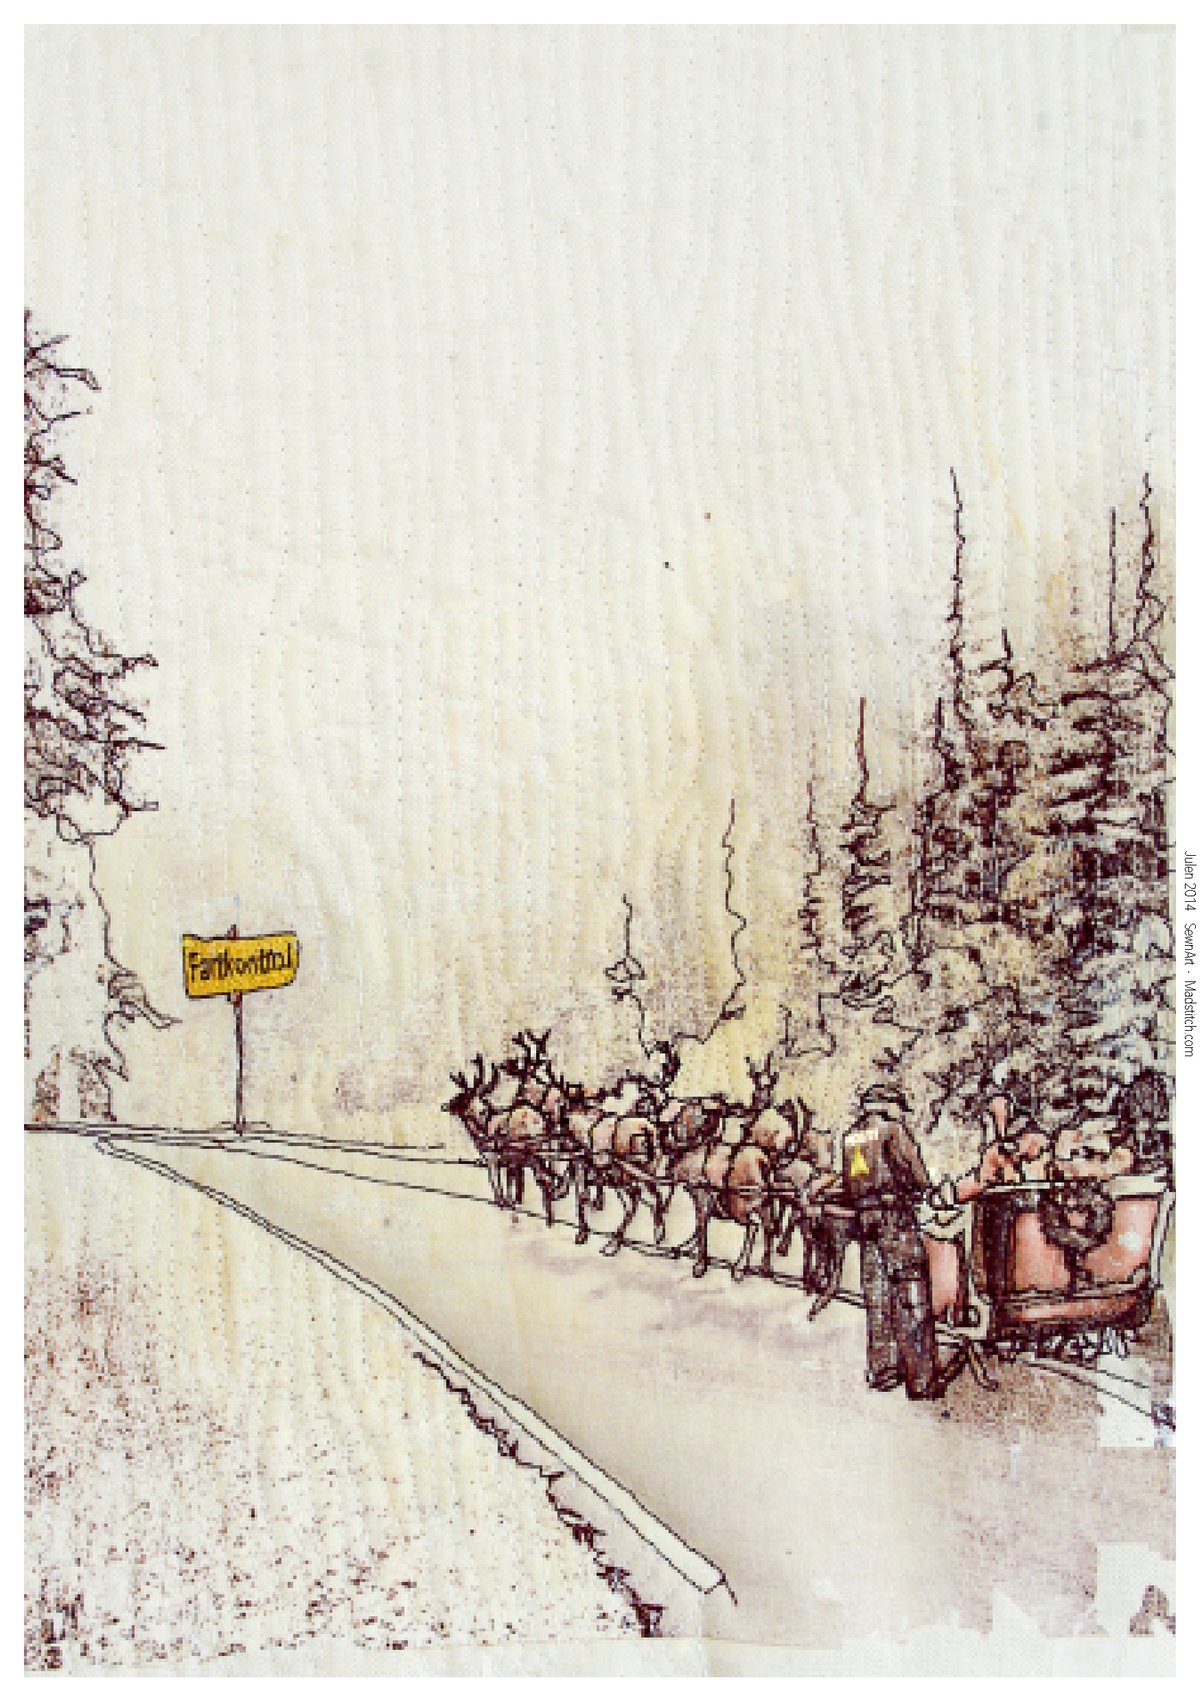 Image of Slow down Christmas - artcard